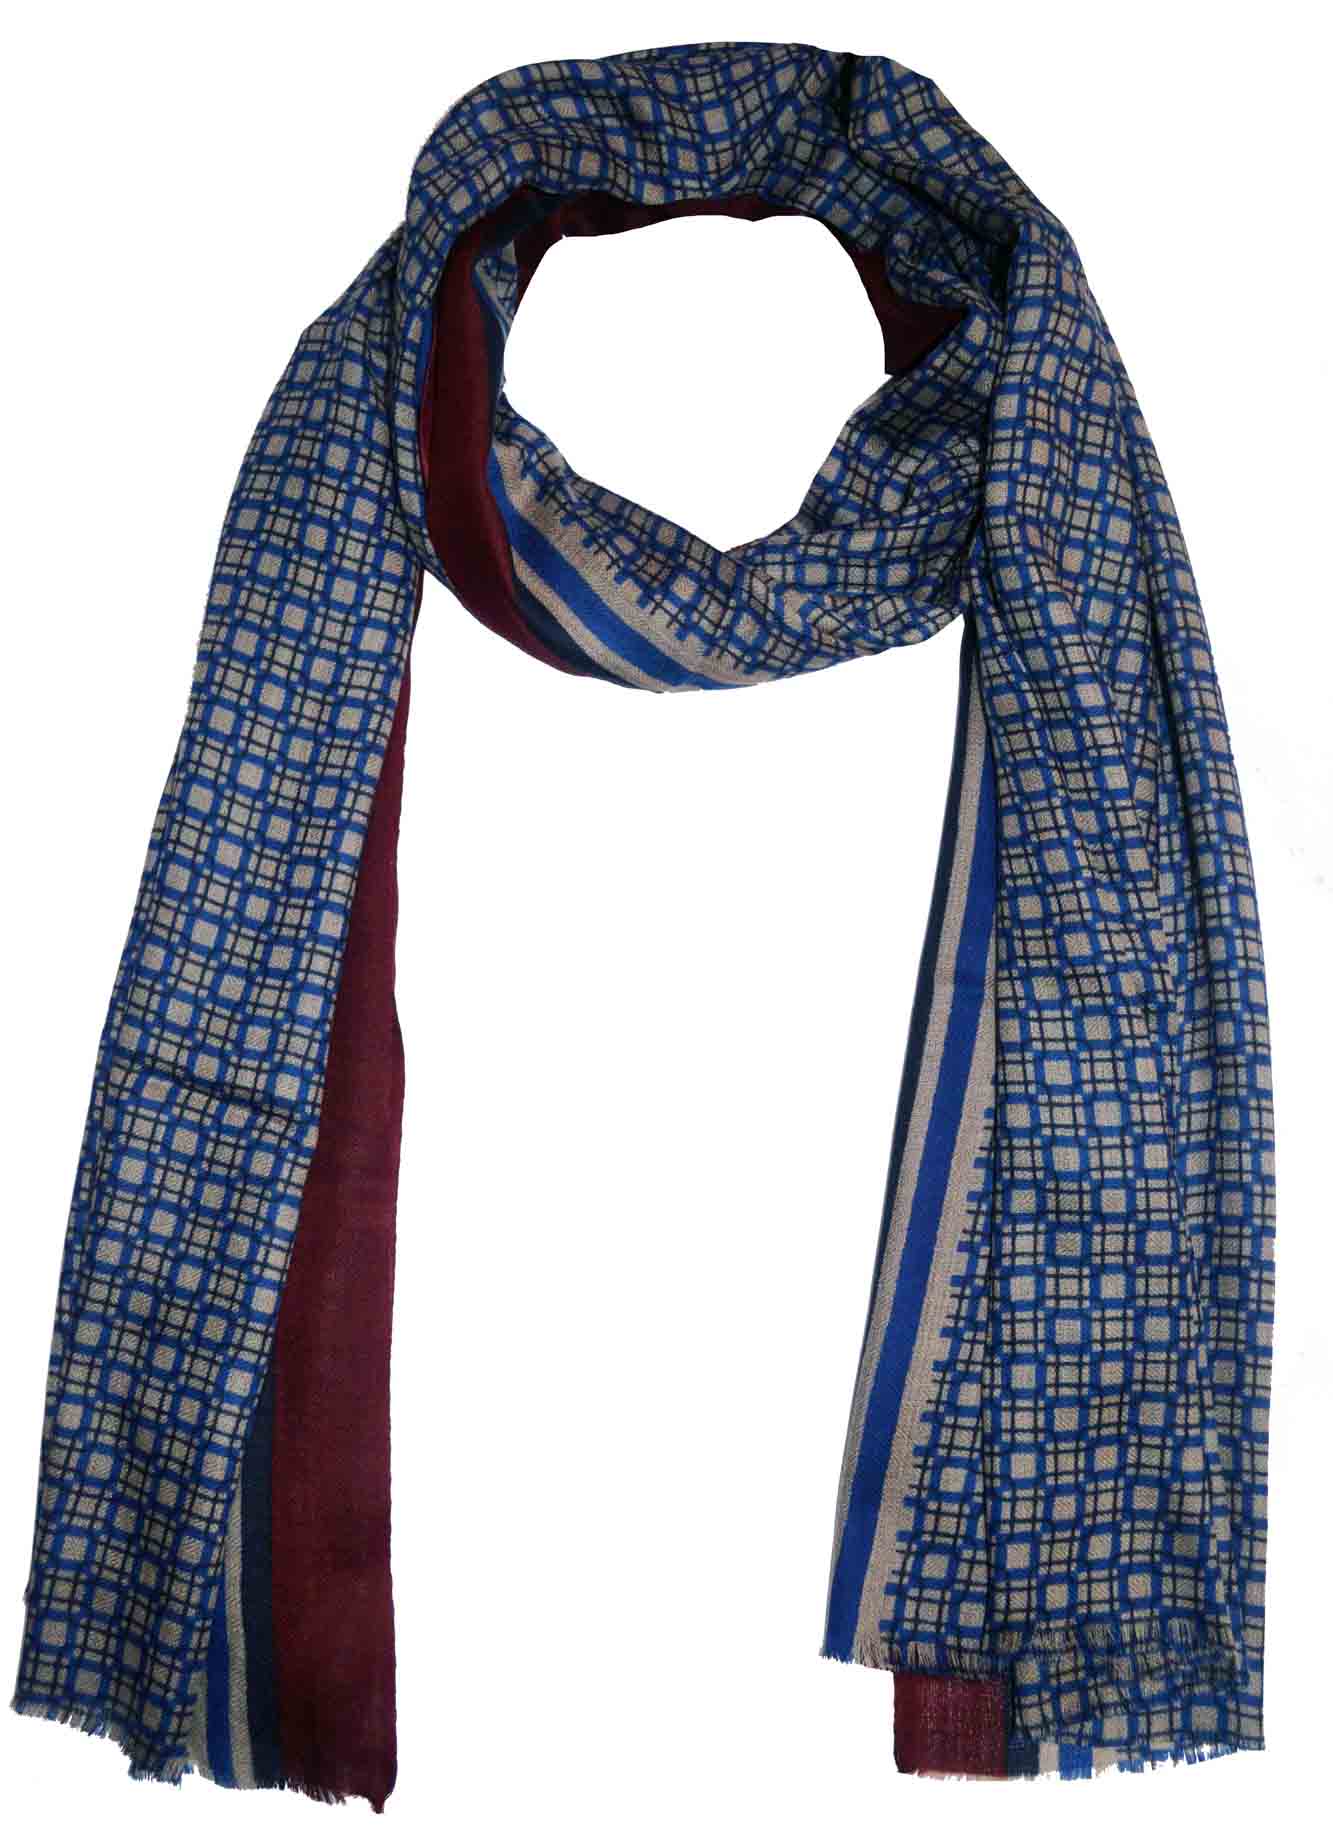 Etole écharpe scarf shawl châle 100% pashmina rayée cachemire bleu ladydjou 